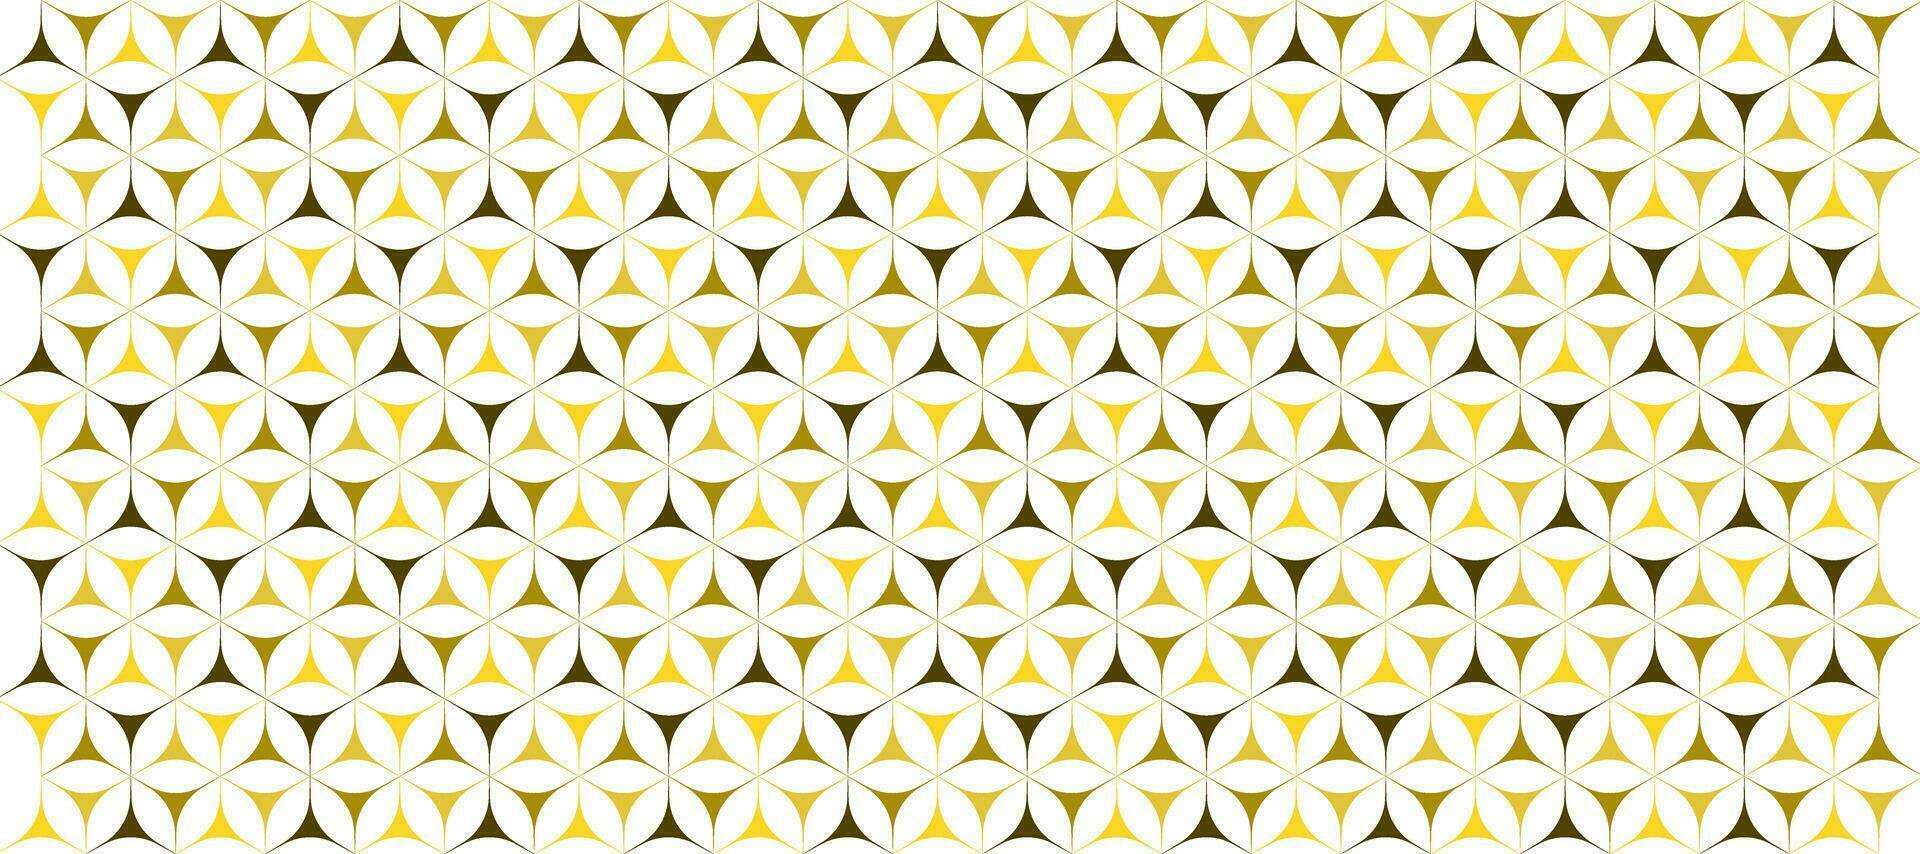 golden hexagonal retro vintage wrap paper pattern design background vector